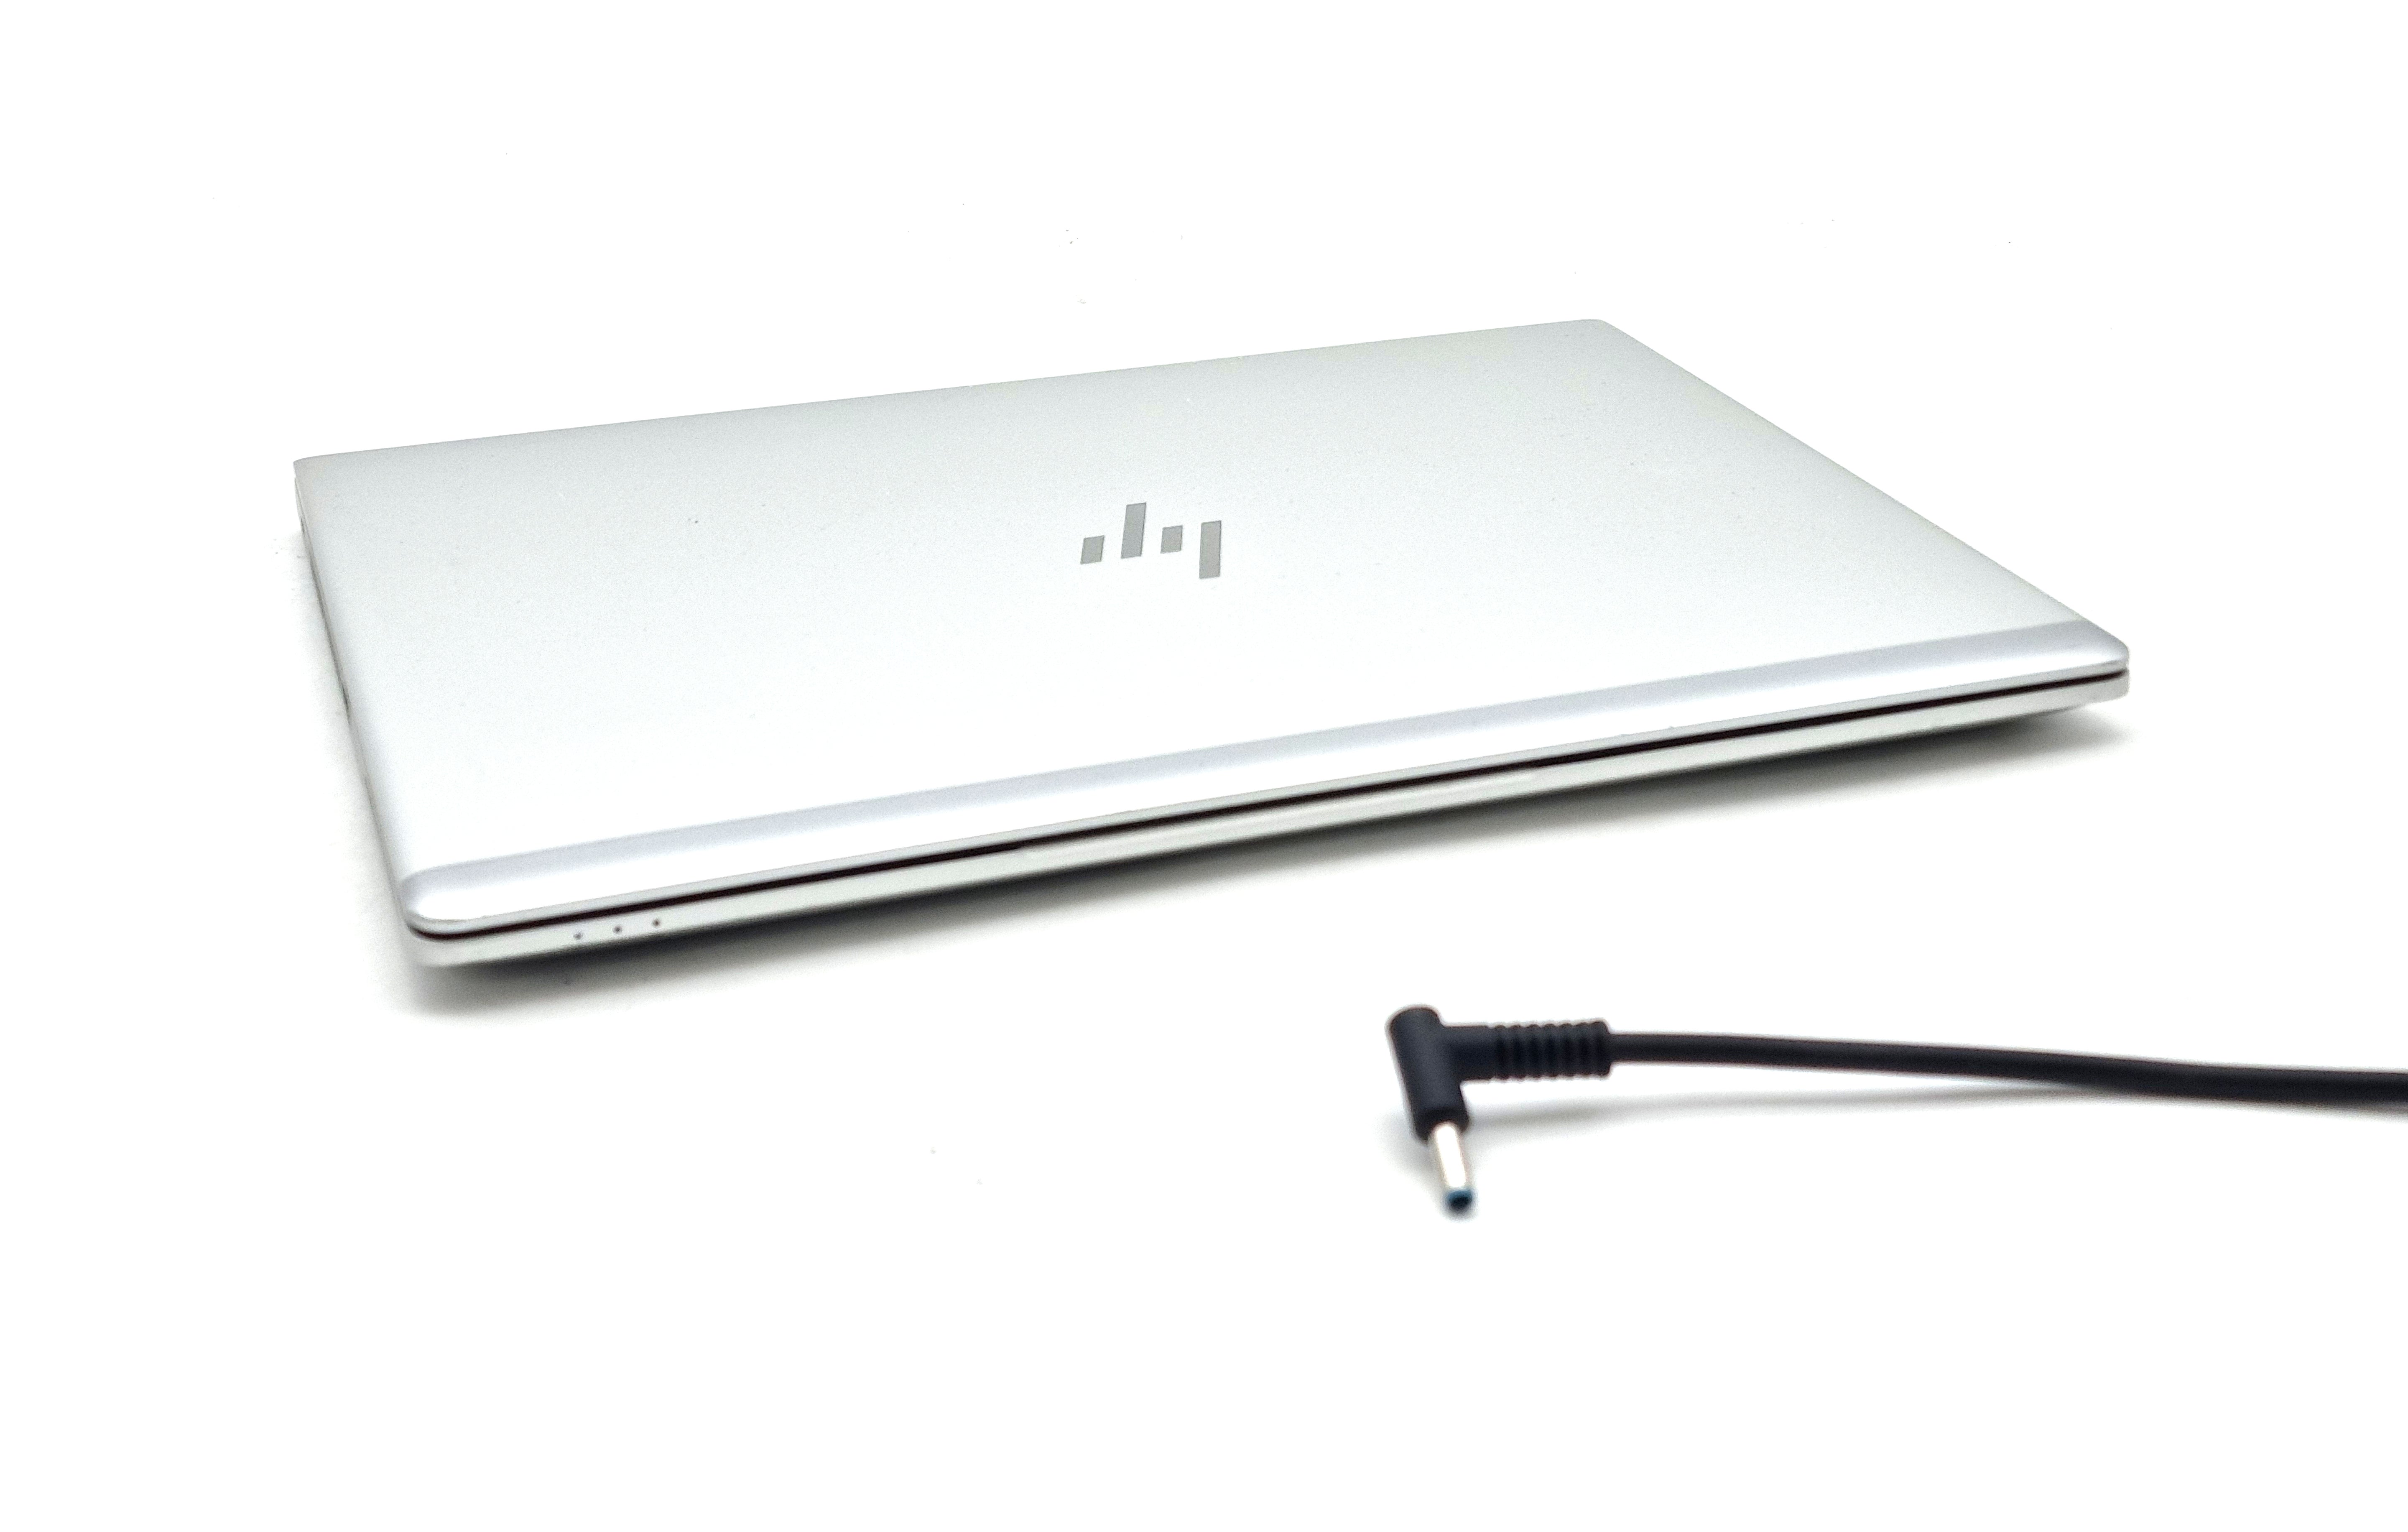 HP Elitebook 830 G5 Laptop, 13.3"  i7 8th Gen, 8GB RAM, 256GB SSD